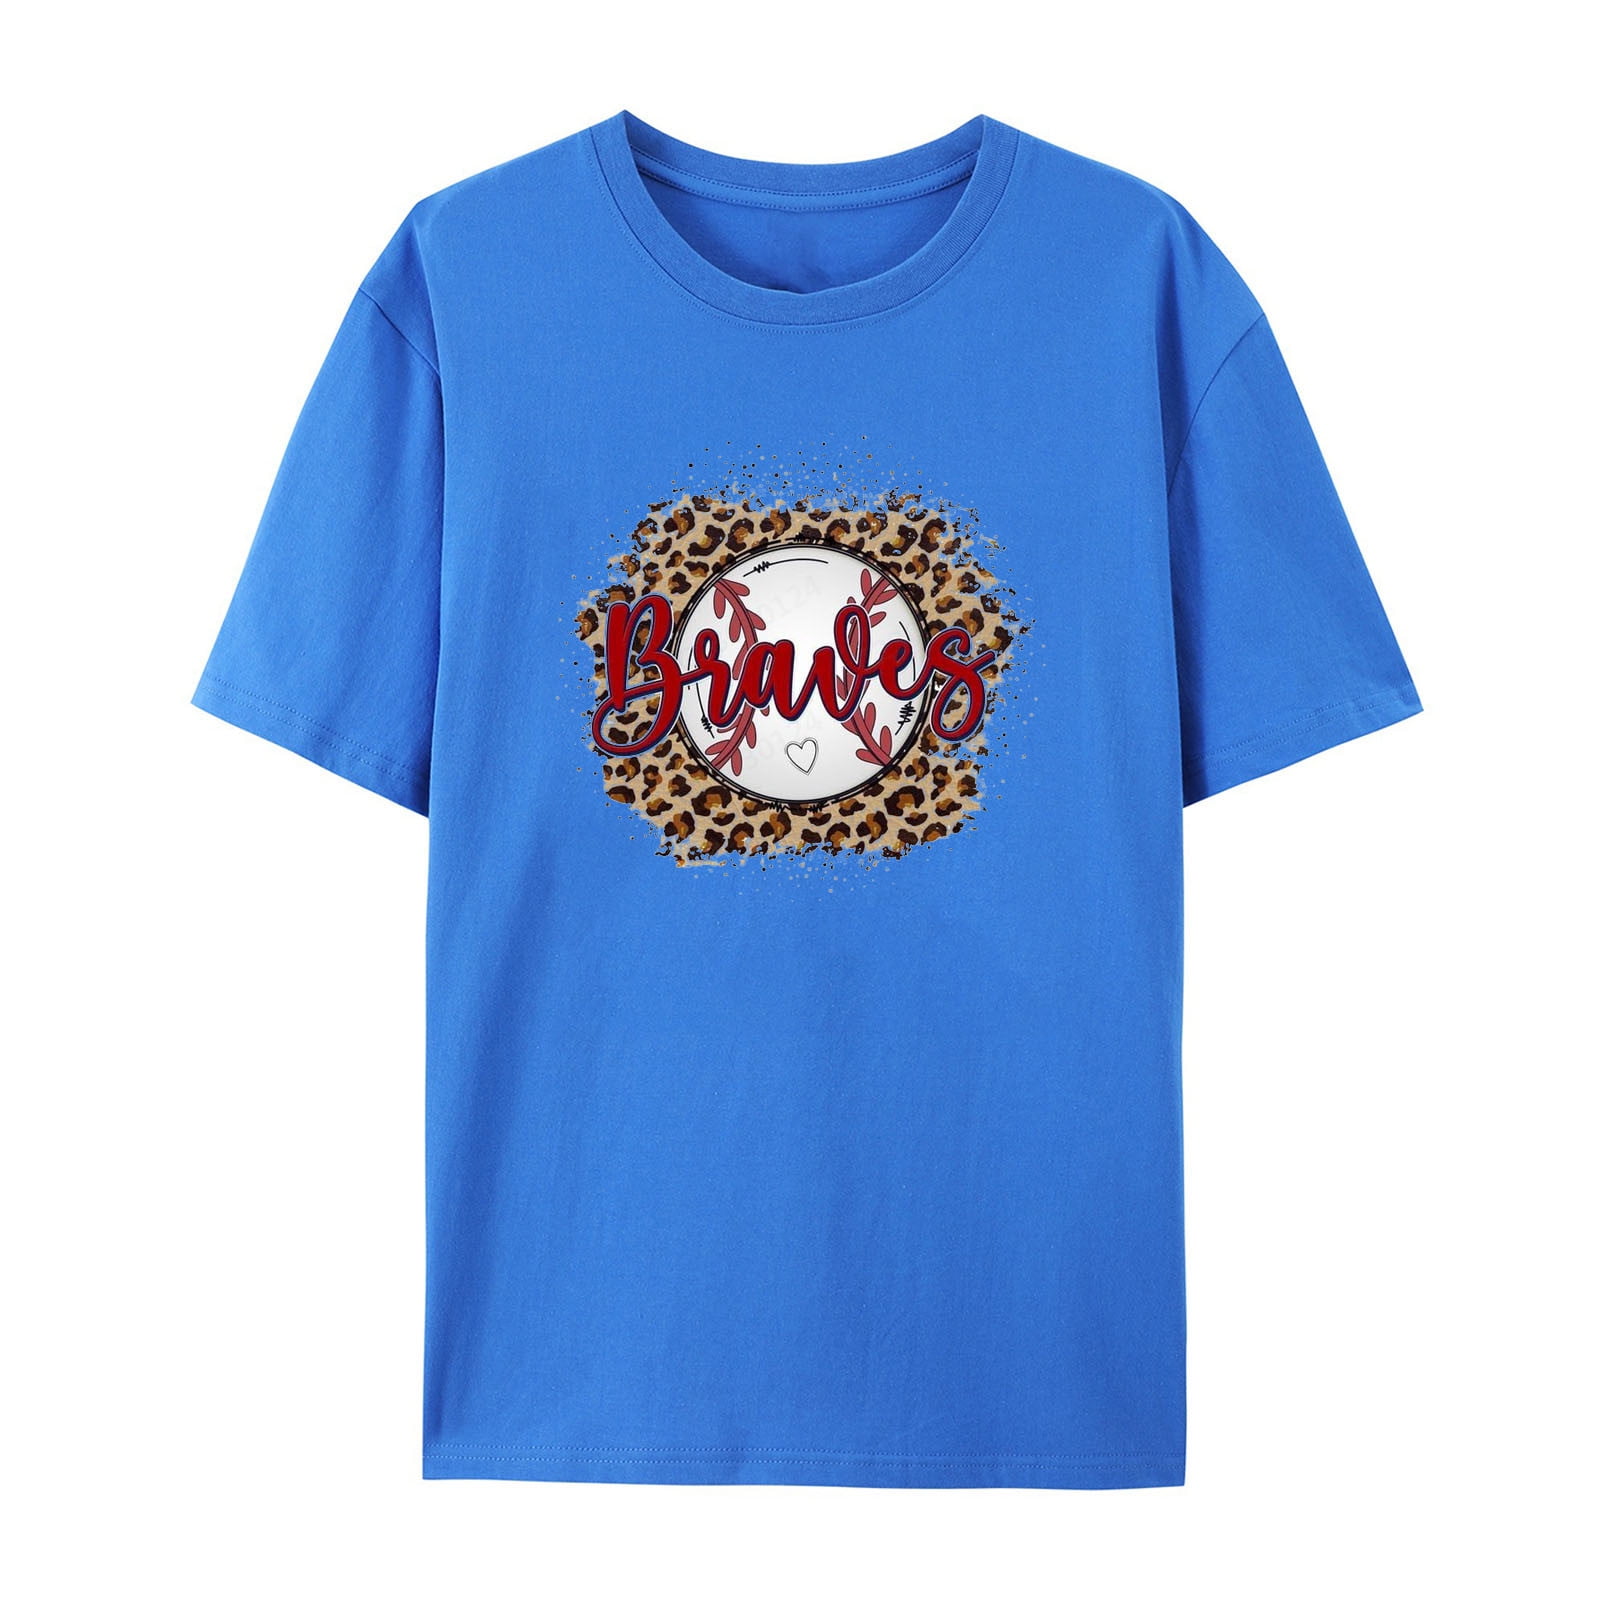 Aboser T Shirts for Boys Kids Girls Cotton Crew Neck Shirt Baseball Mom ...